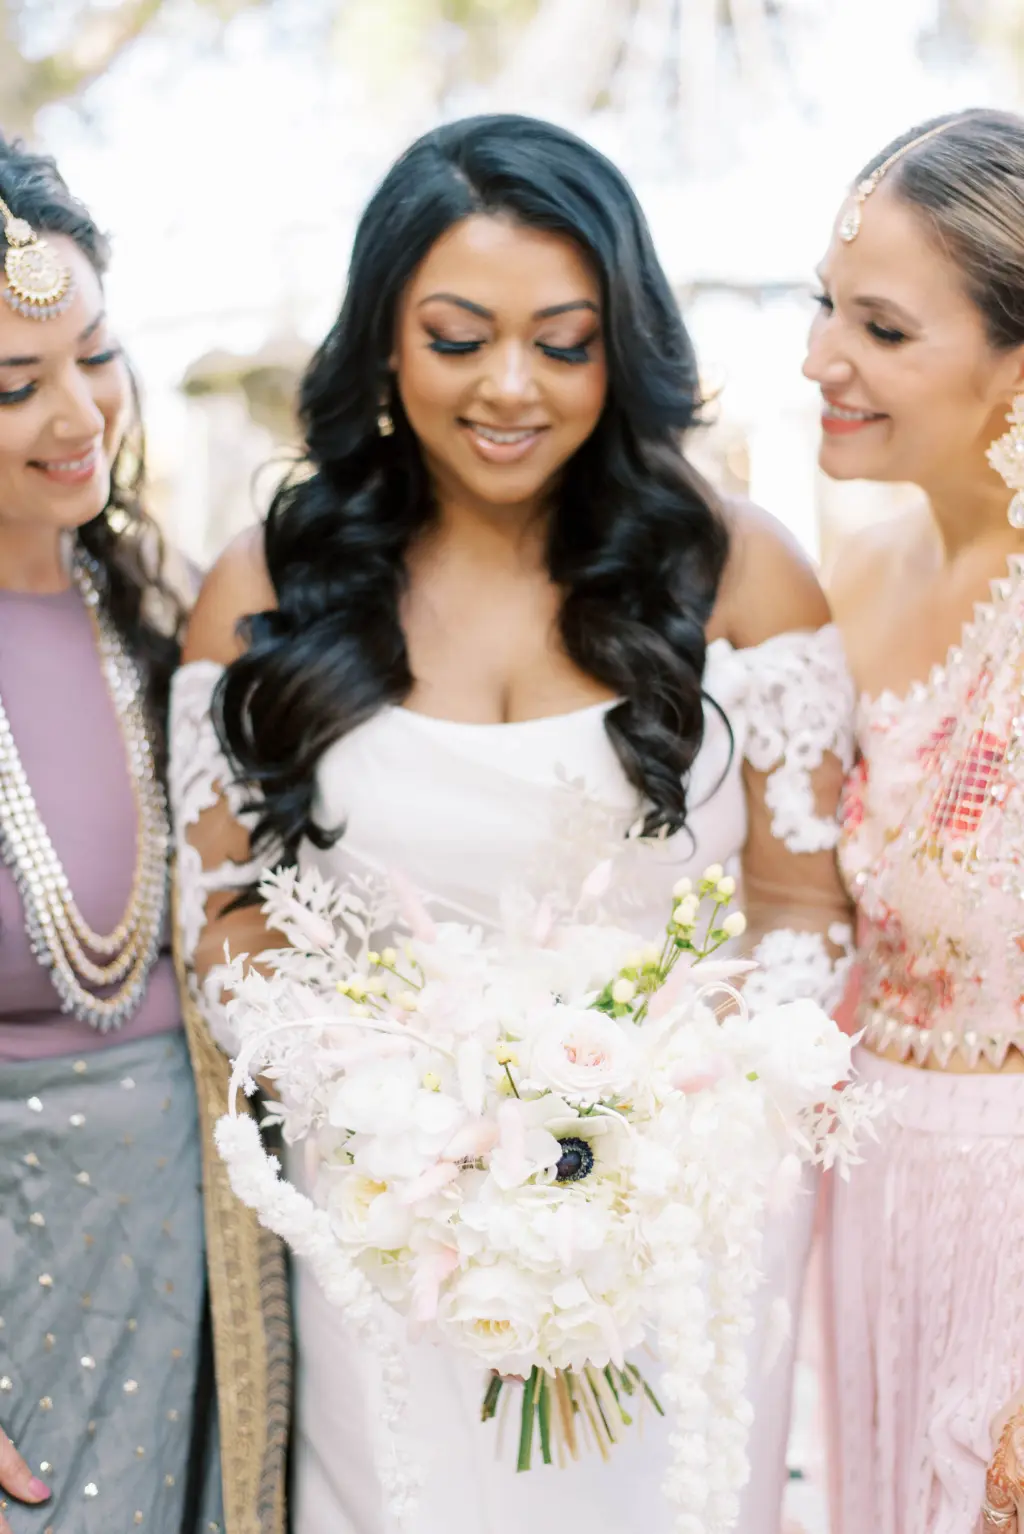 Bride with Bridesmaids Wedding Portrait | Indian Wedding Inspiration | Tampa Bay Florist Lemon Drops Weddings & Events